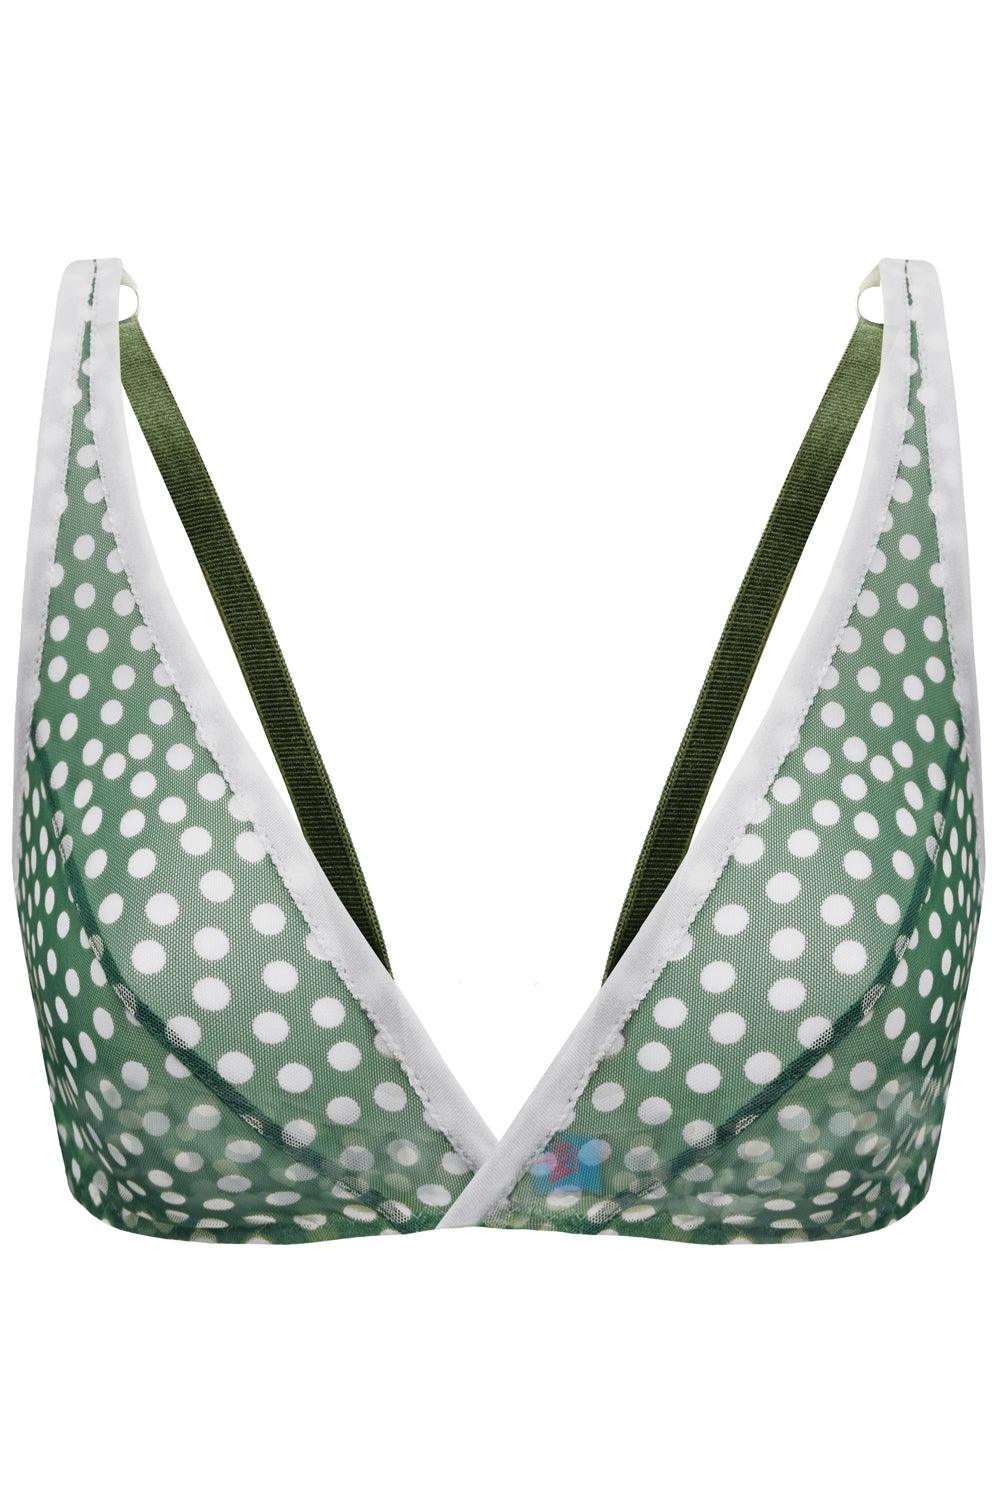 Green Dream soft bra - Bra by WOW! Panties. Shop on yesUndress